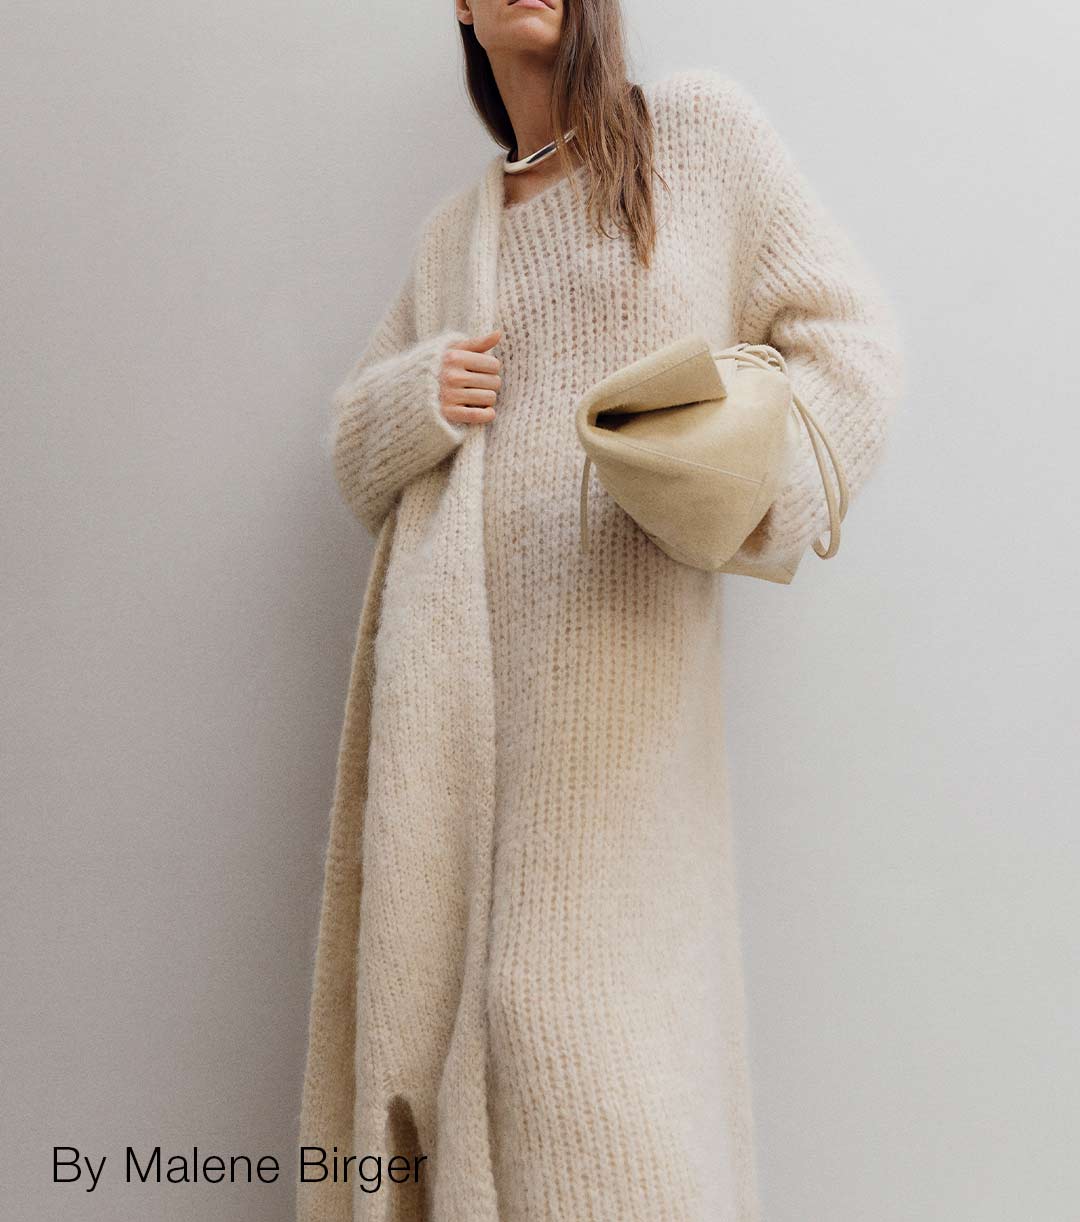 Coarse knitwear is a must-have in Fall/Winter 2021 wardrobes.